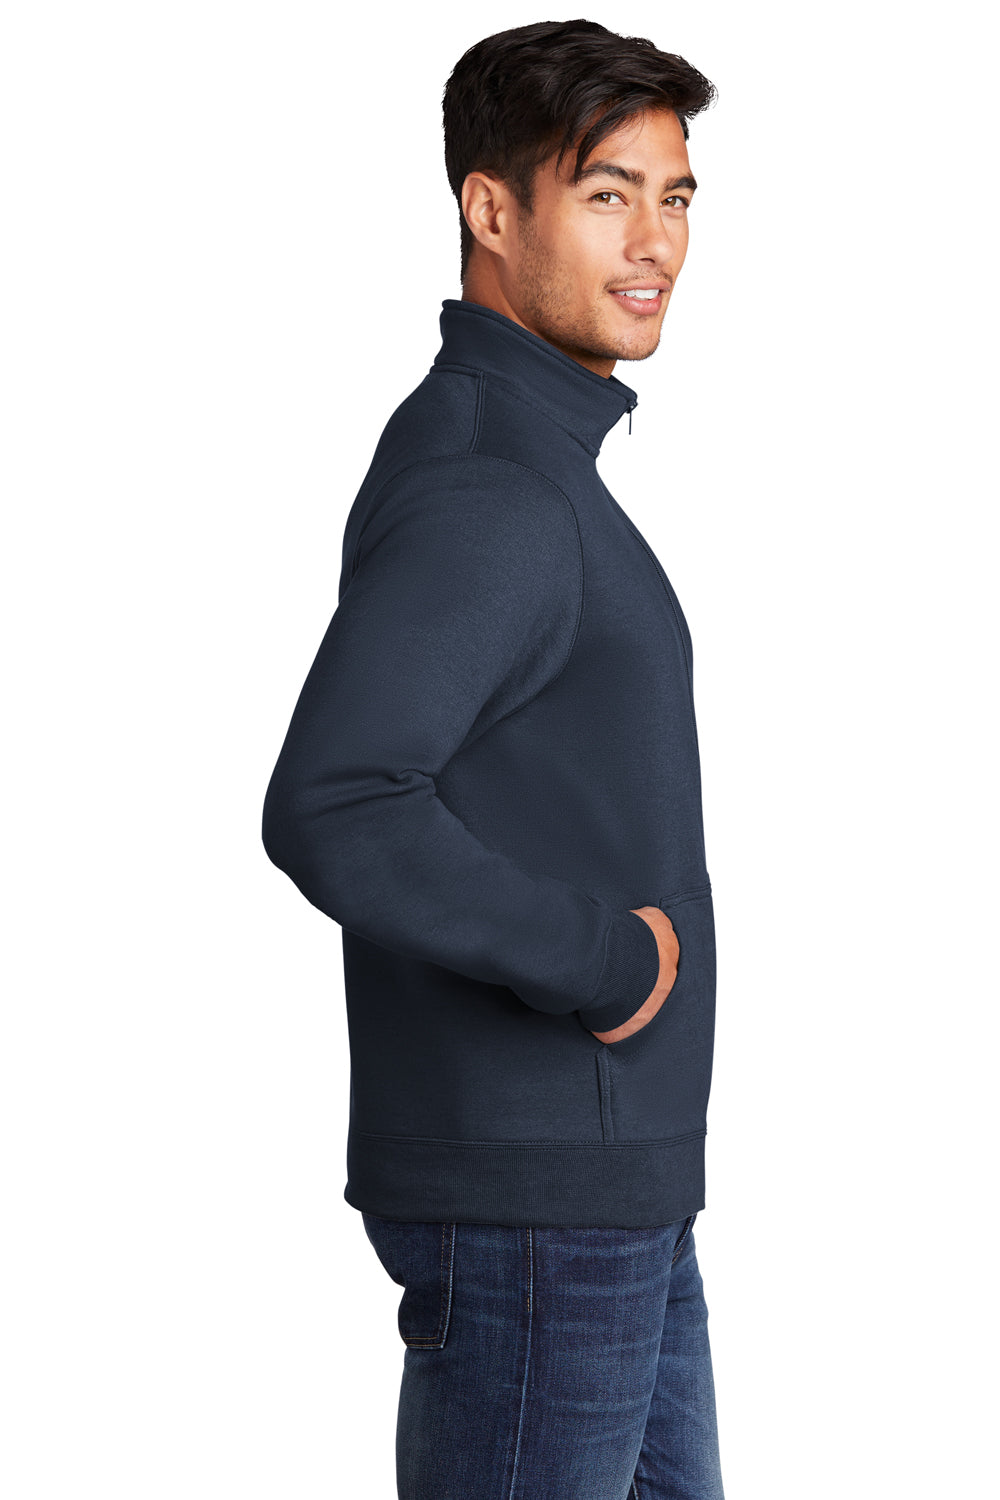 Port & Company Mens Core Fleece Full Zip Sweatshirt Navy Blue Side